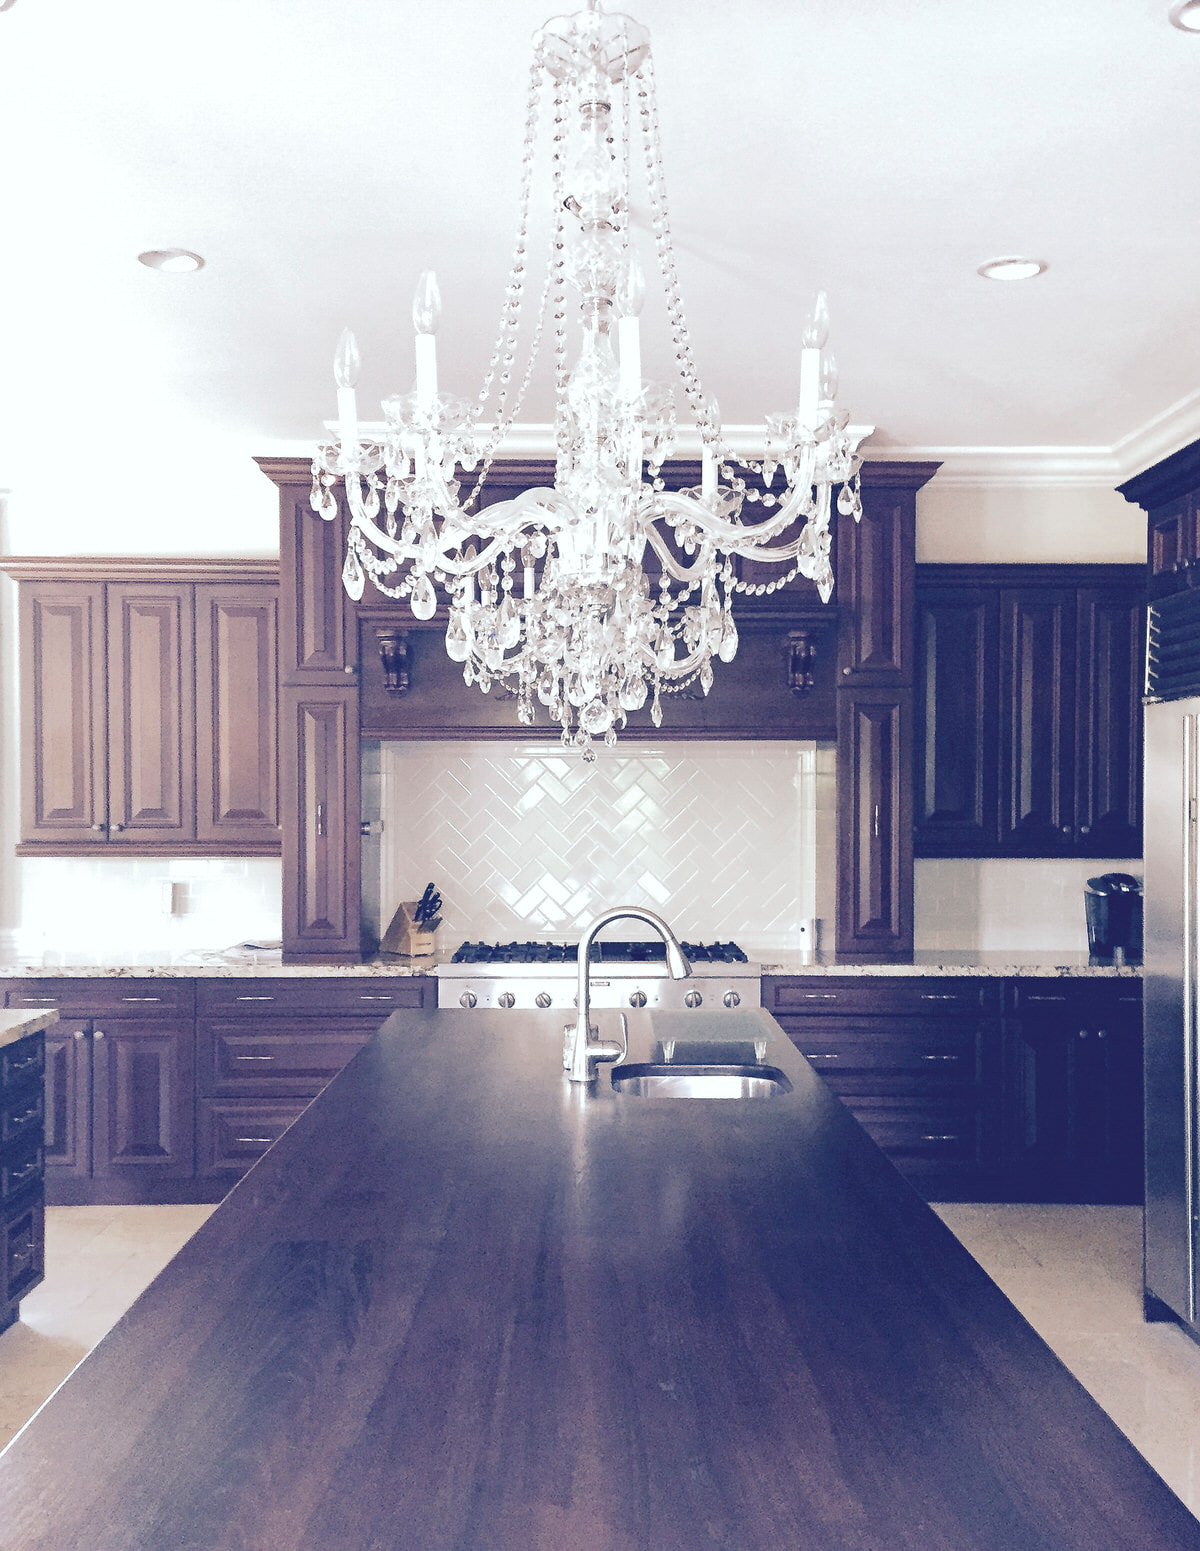 luxury white chandelier over dark wood island and cabinets